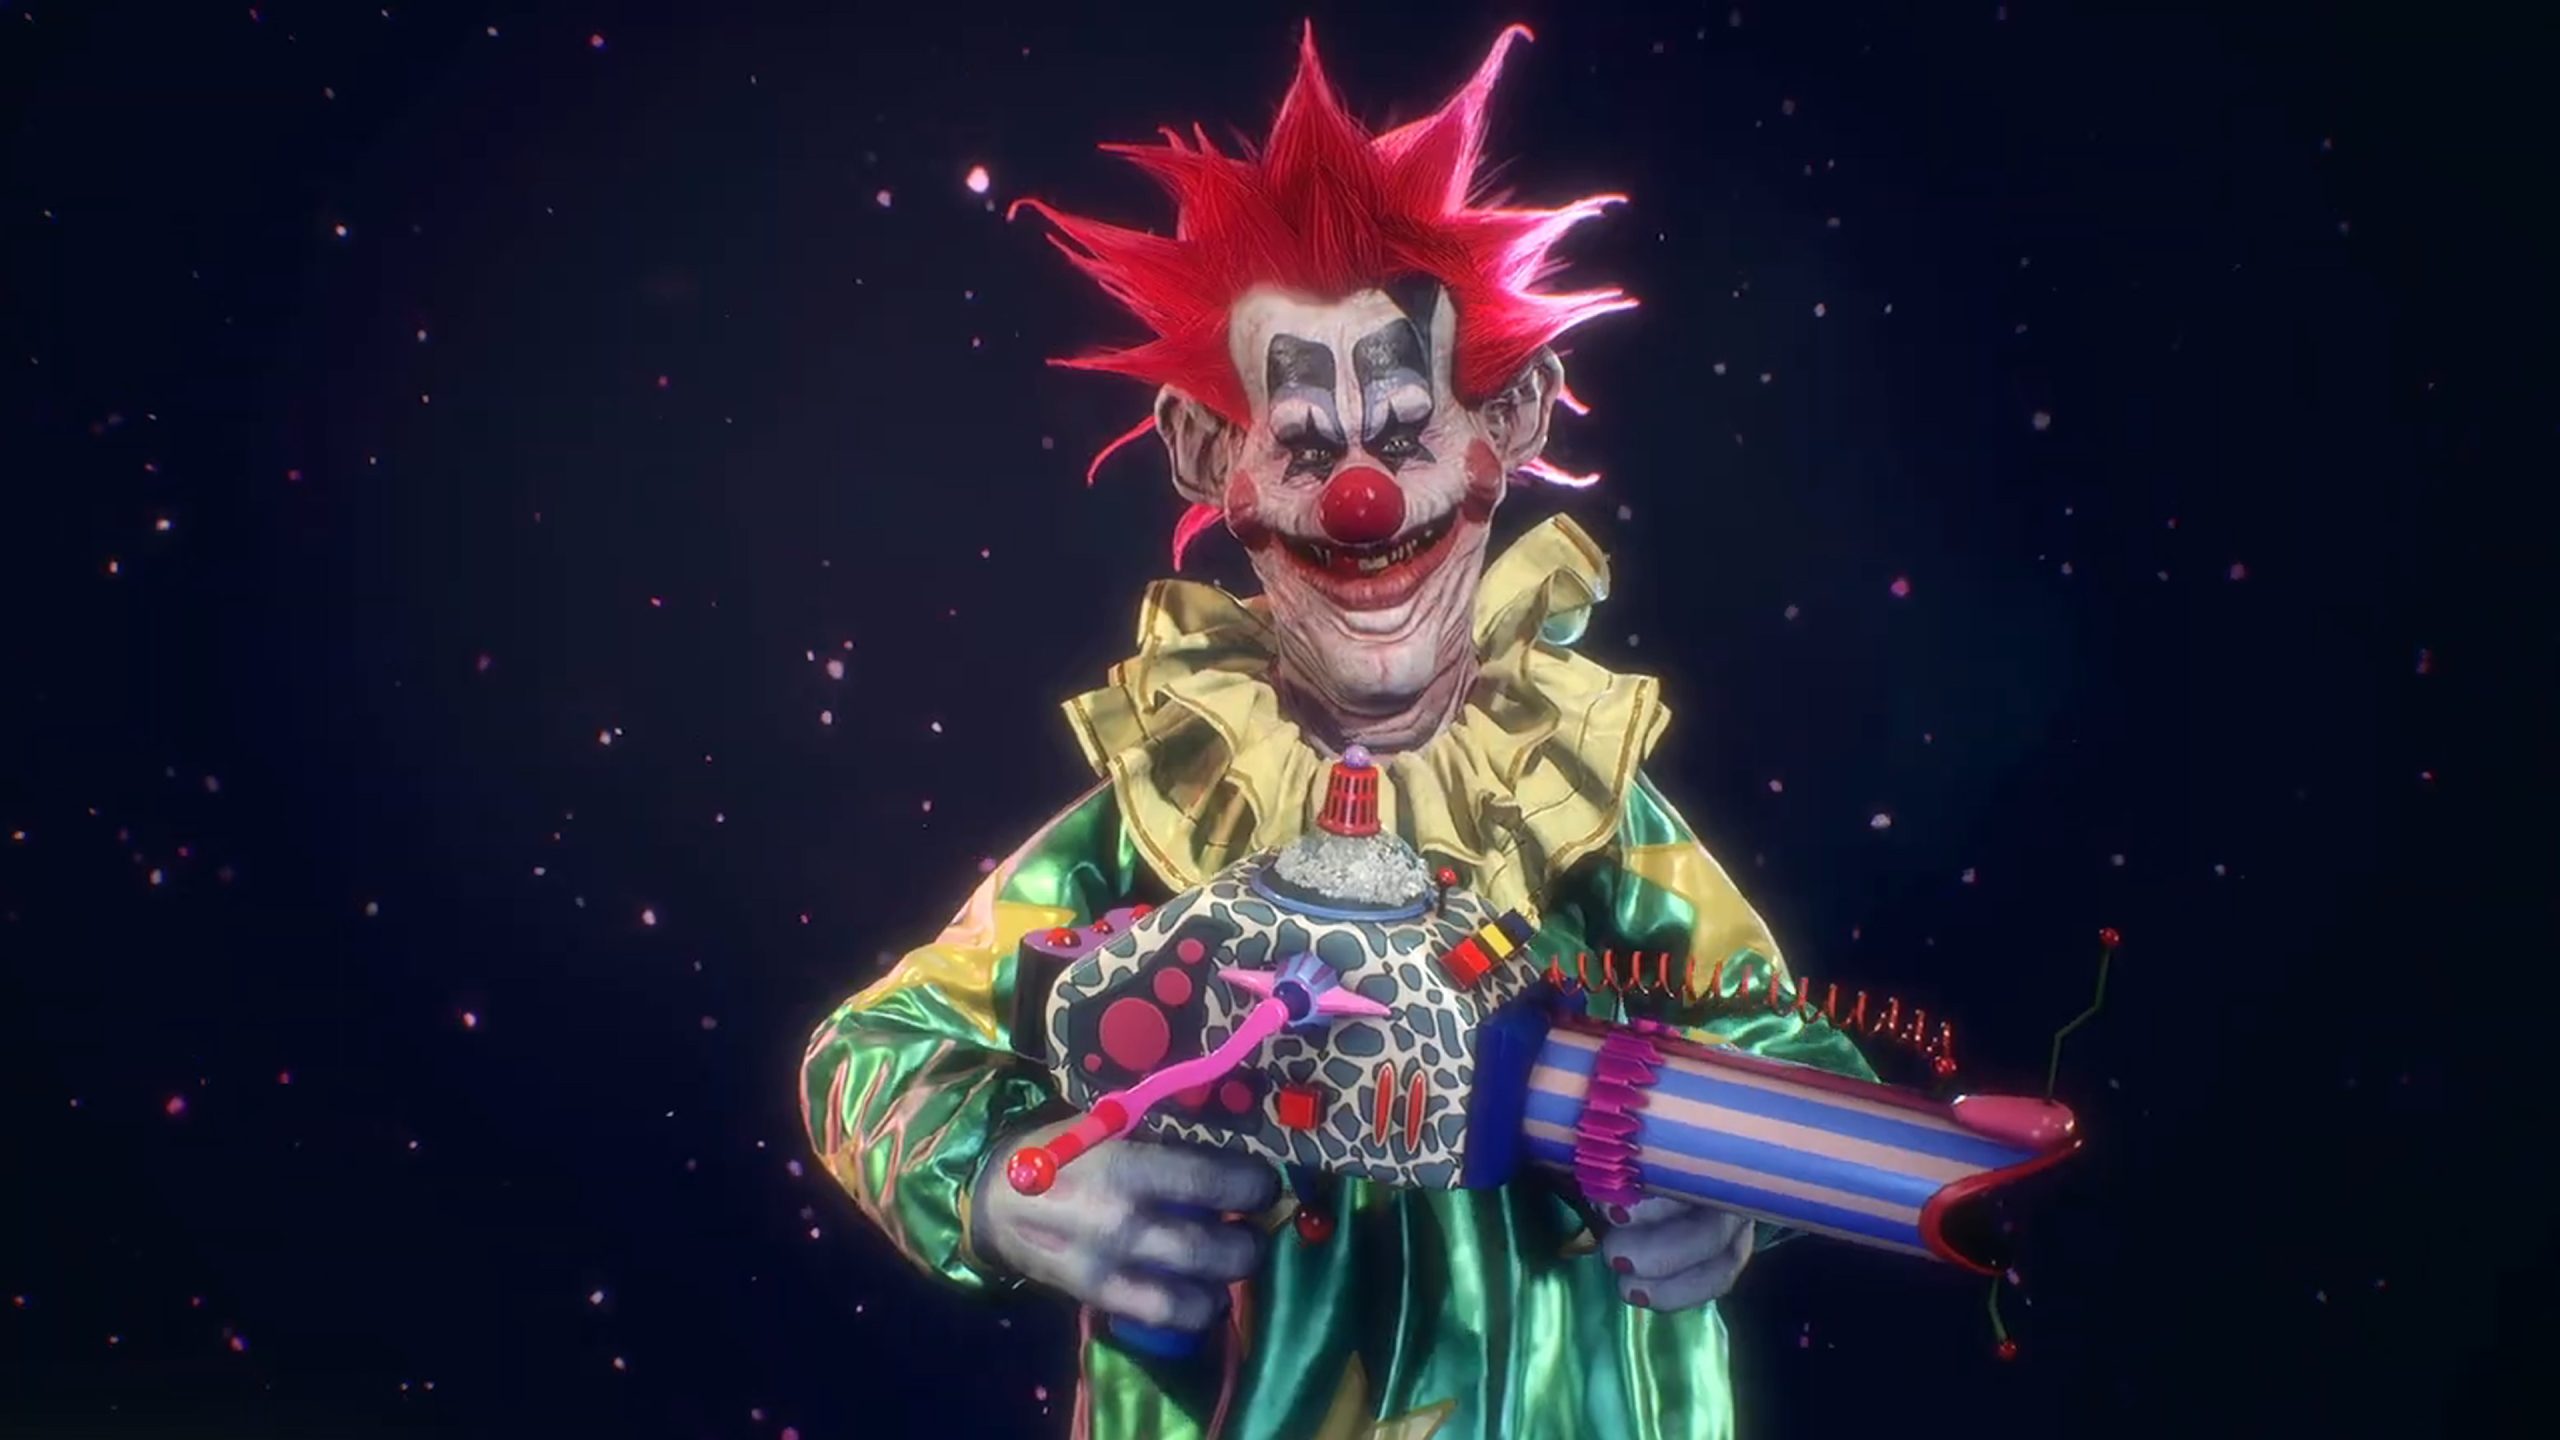 Игры клоун 1. Клоуны-убийцы из космоса. Клоуны-убийцы из космоса игра. Клоун игра. Killer Klowns from Outer Space the game.